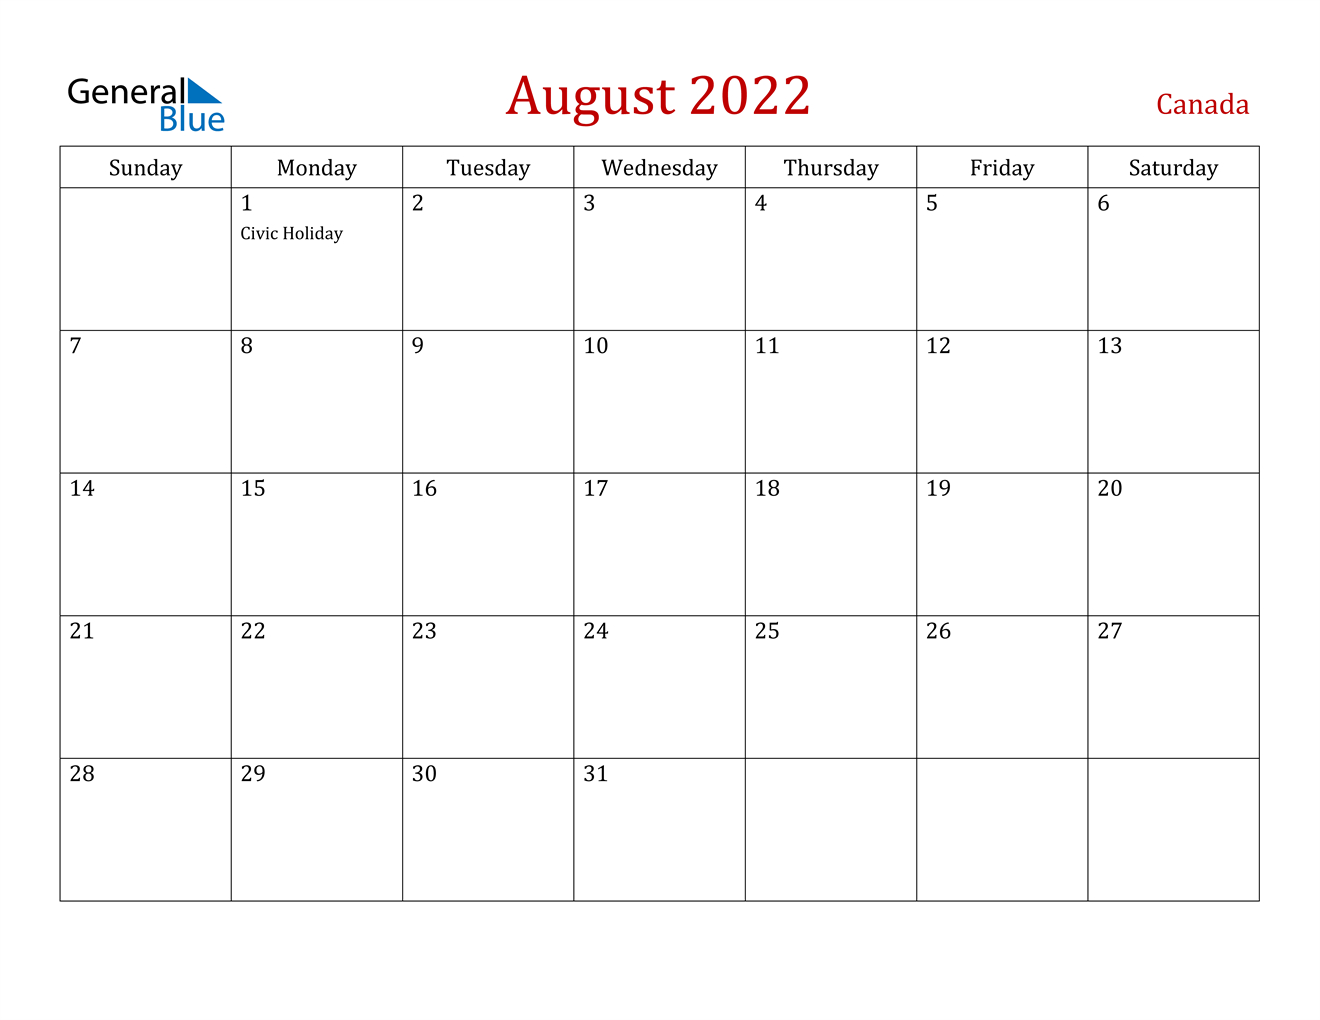 August 2022 Calendar - Canada